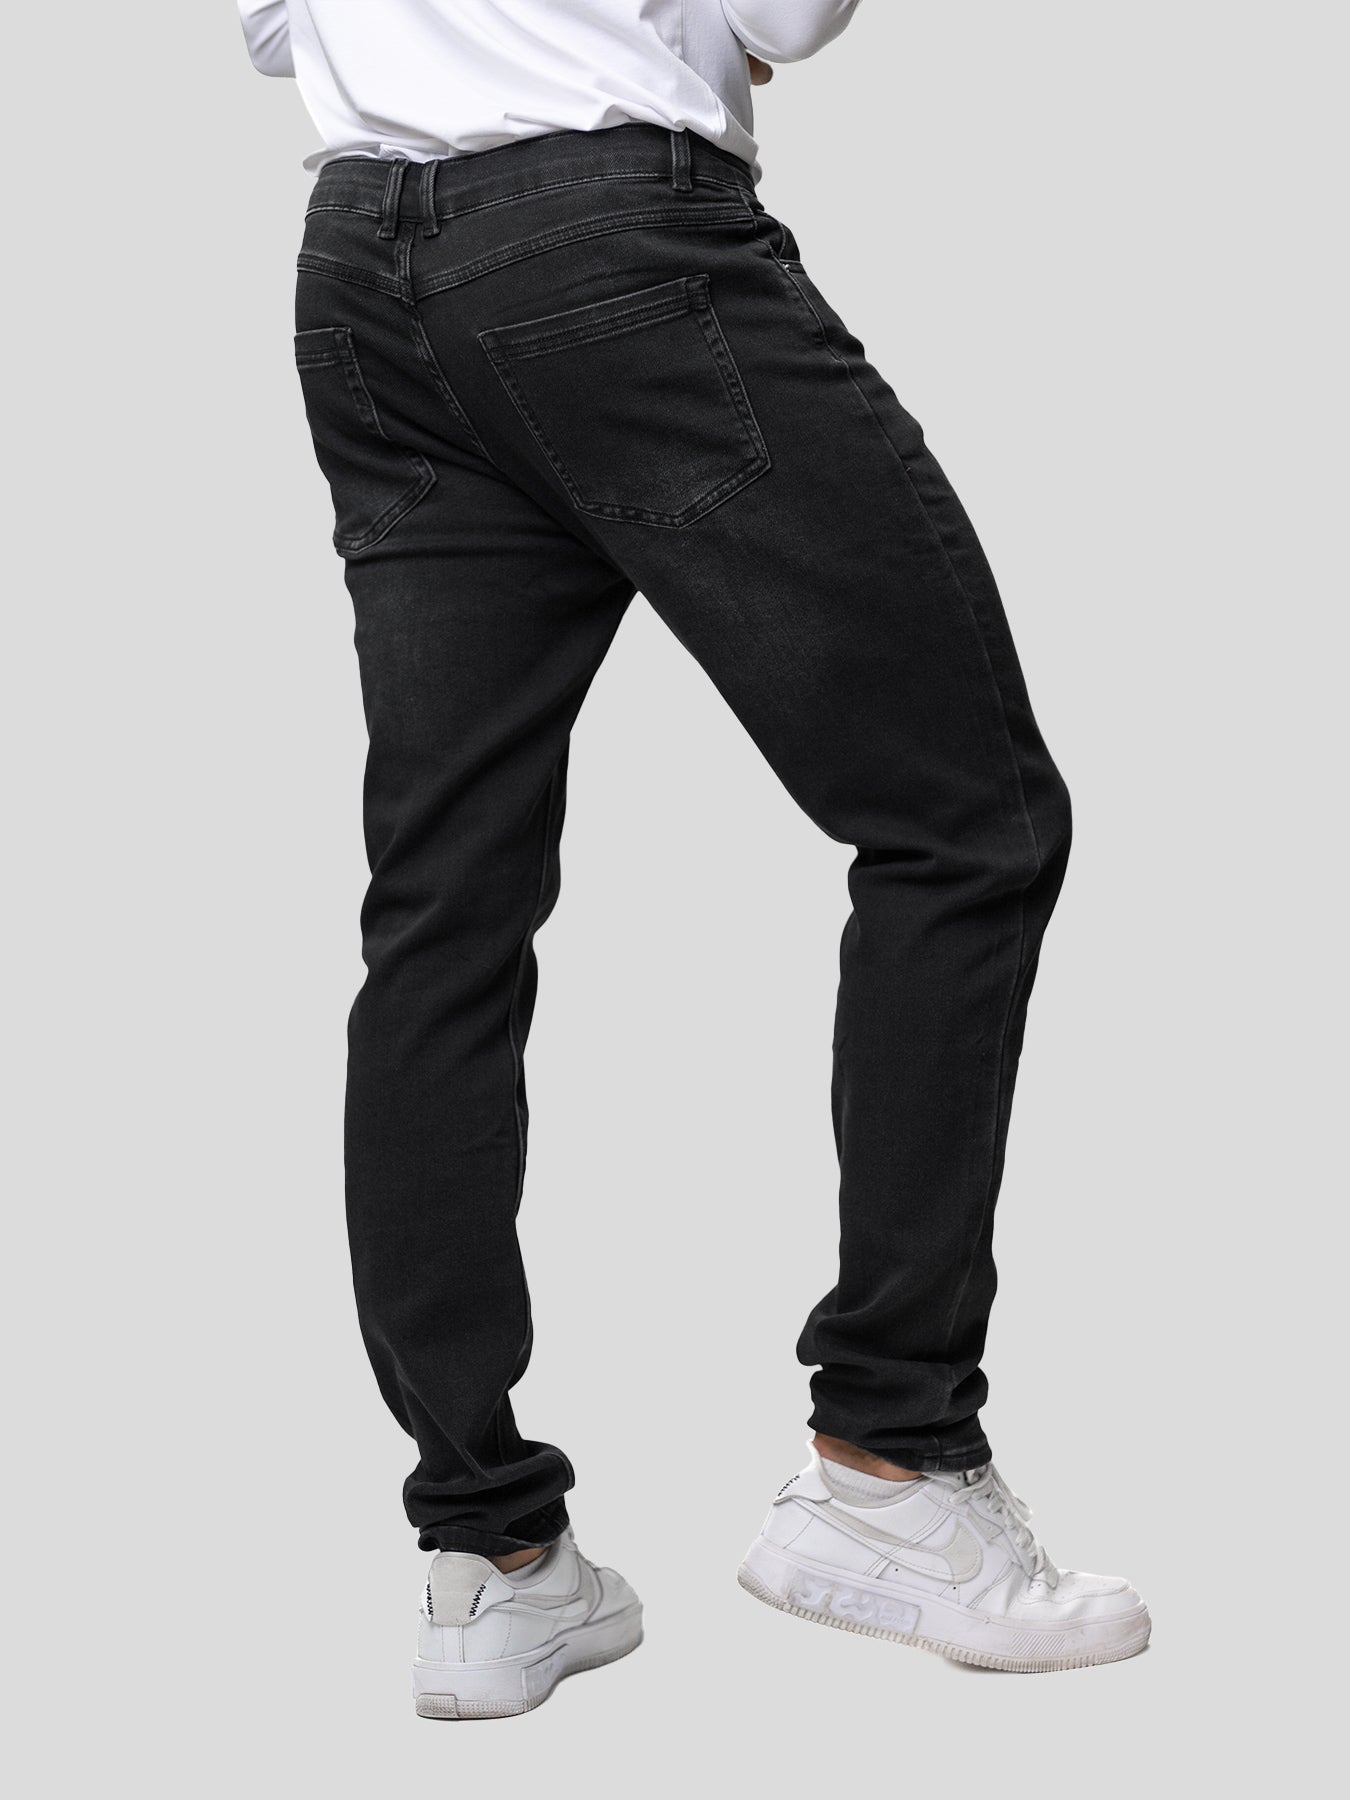 Fioboc Men\'s High Stretch Jeans Classic Pants